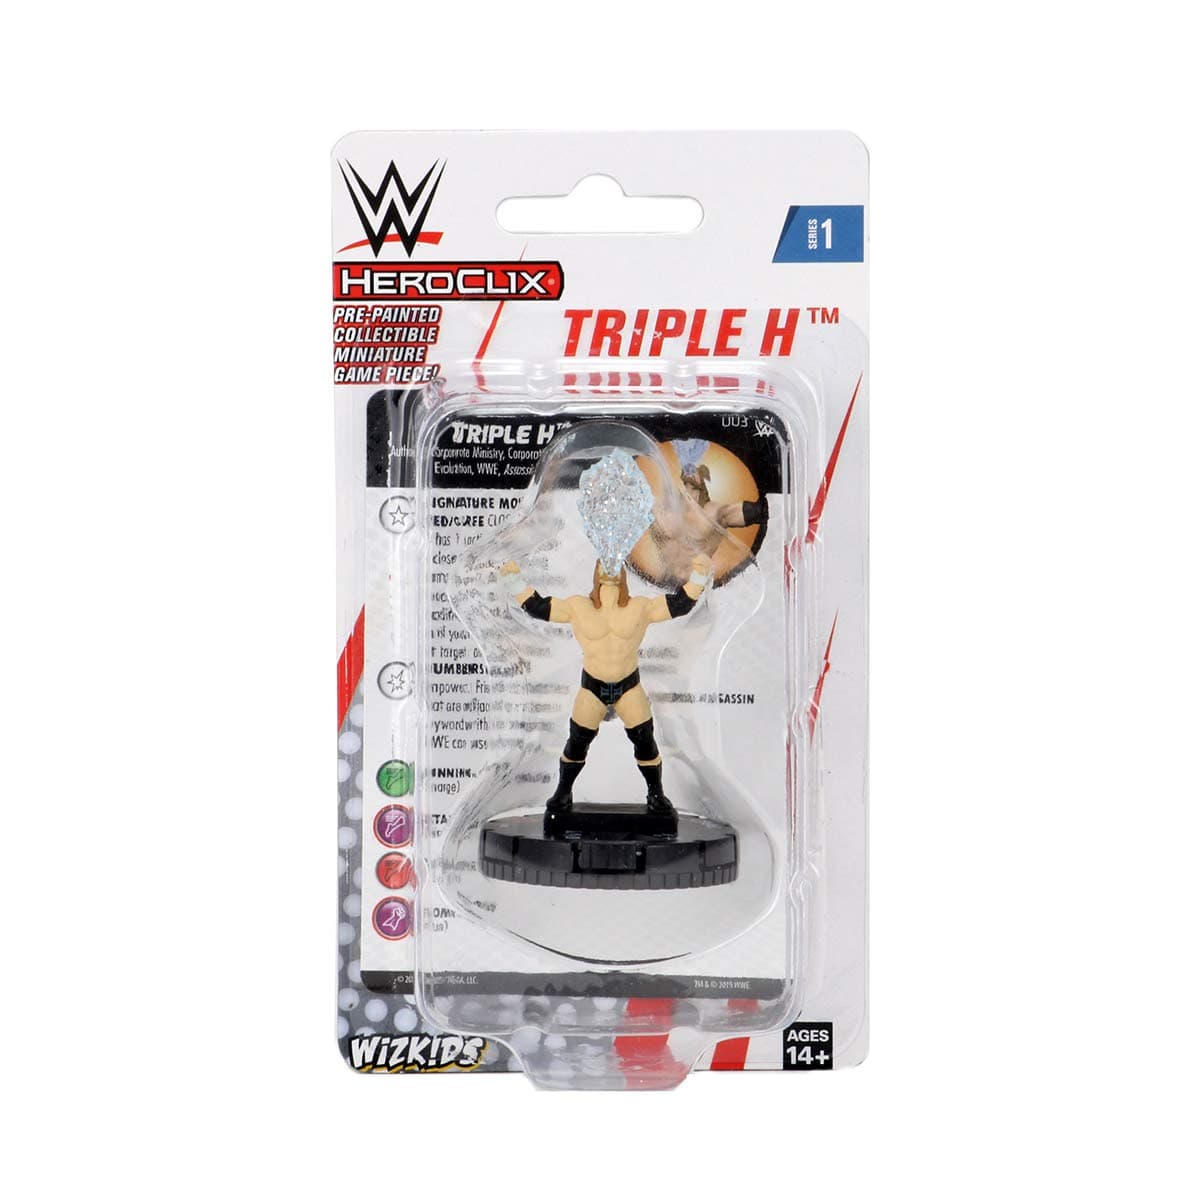 Wizkids/Neca Collectible Miniatures Games Wizkids/Neca WWE HeroClix: Triple H Expansion Pack